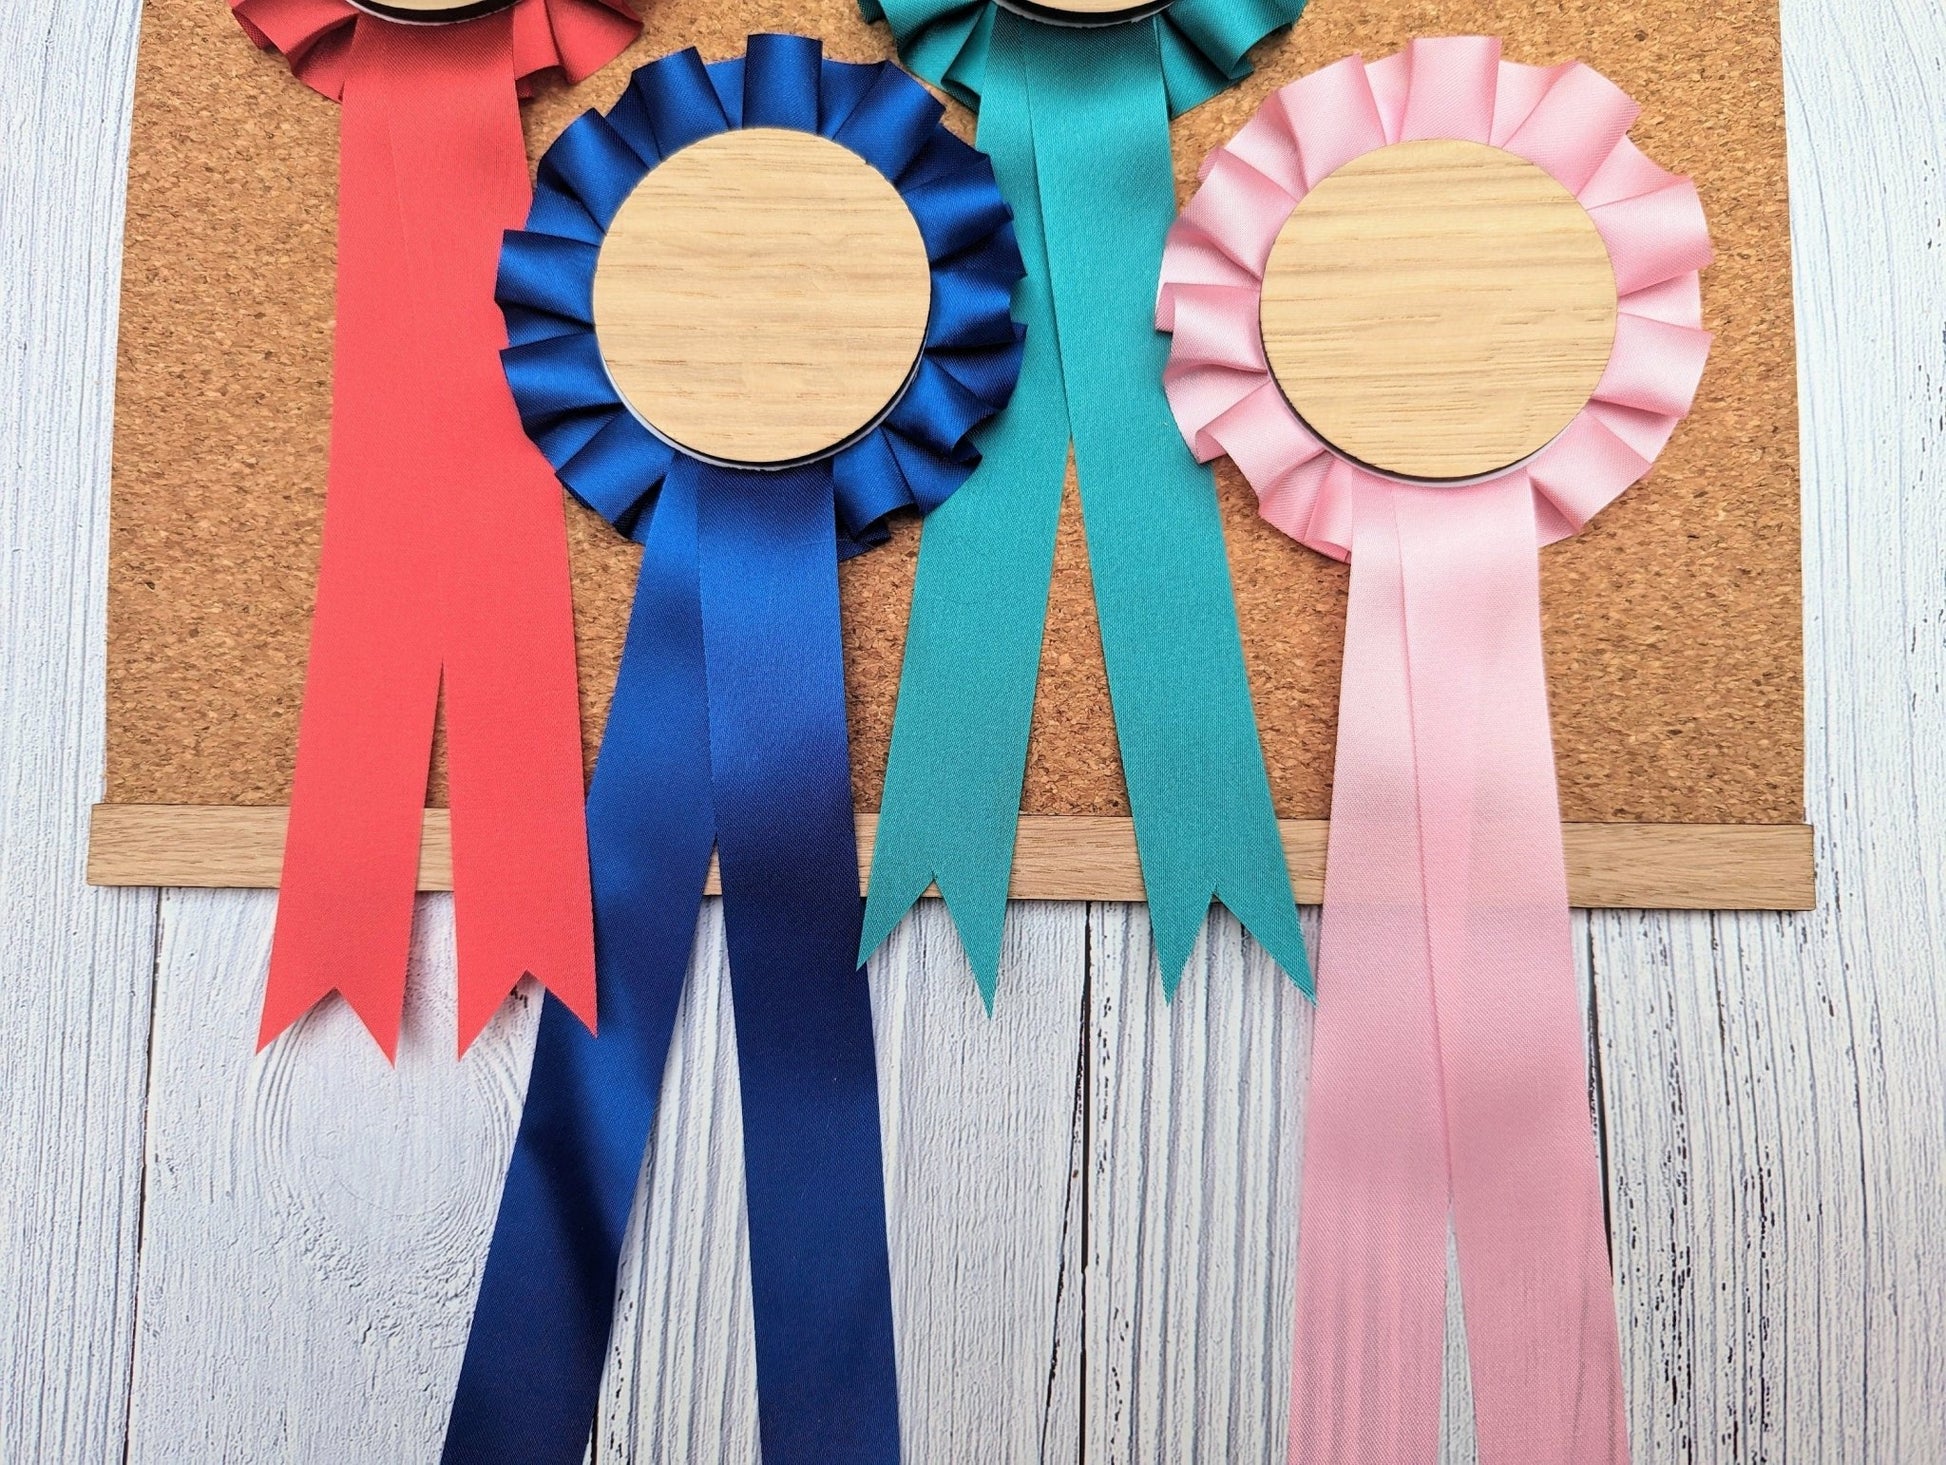 Personalised Yorkshire Terrier Rosette Holder - Custom Dog Show Award Display - Handcrafted Wooden Keepsake for Pet Lovers - CherryGroveCraft